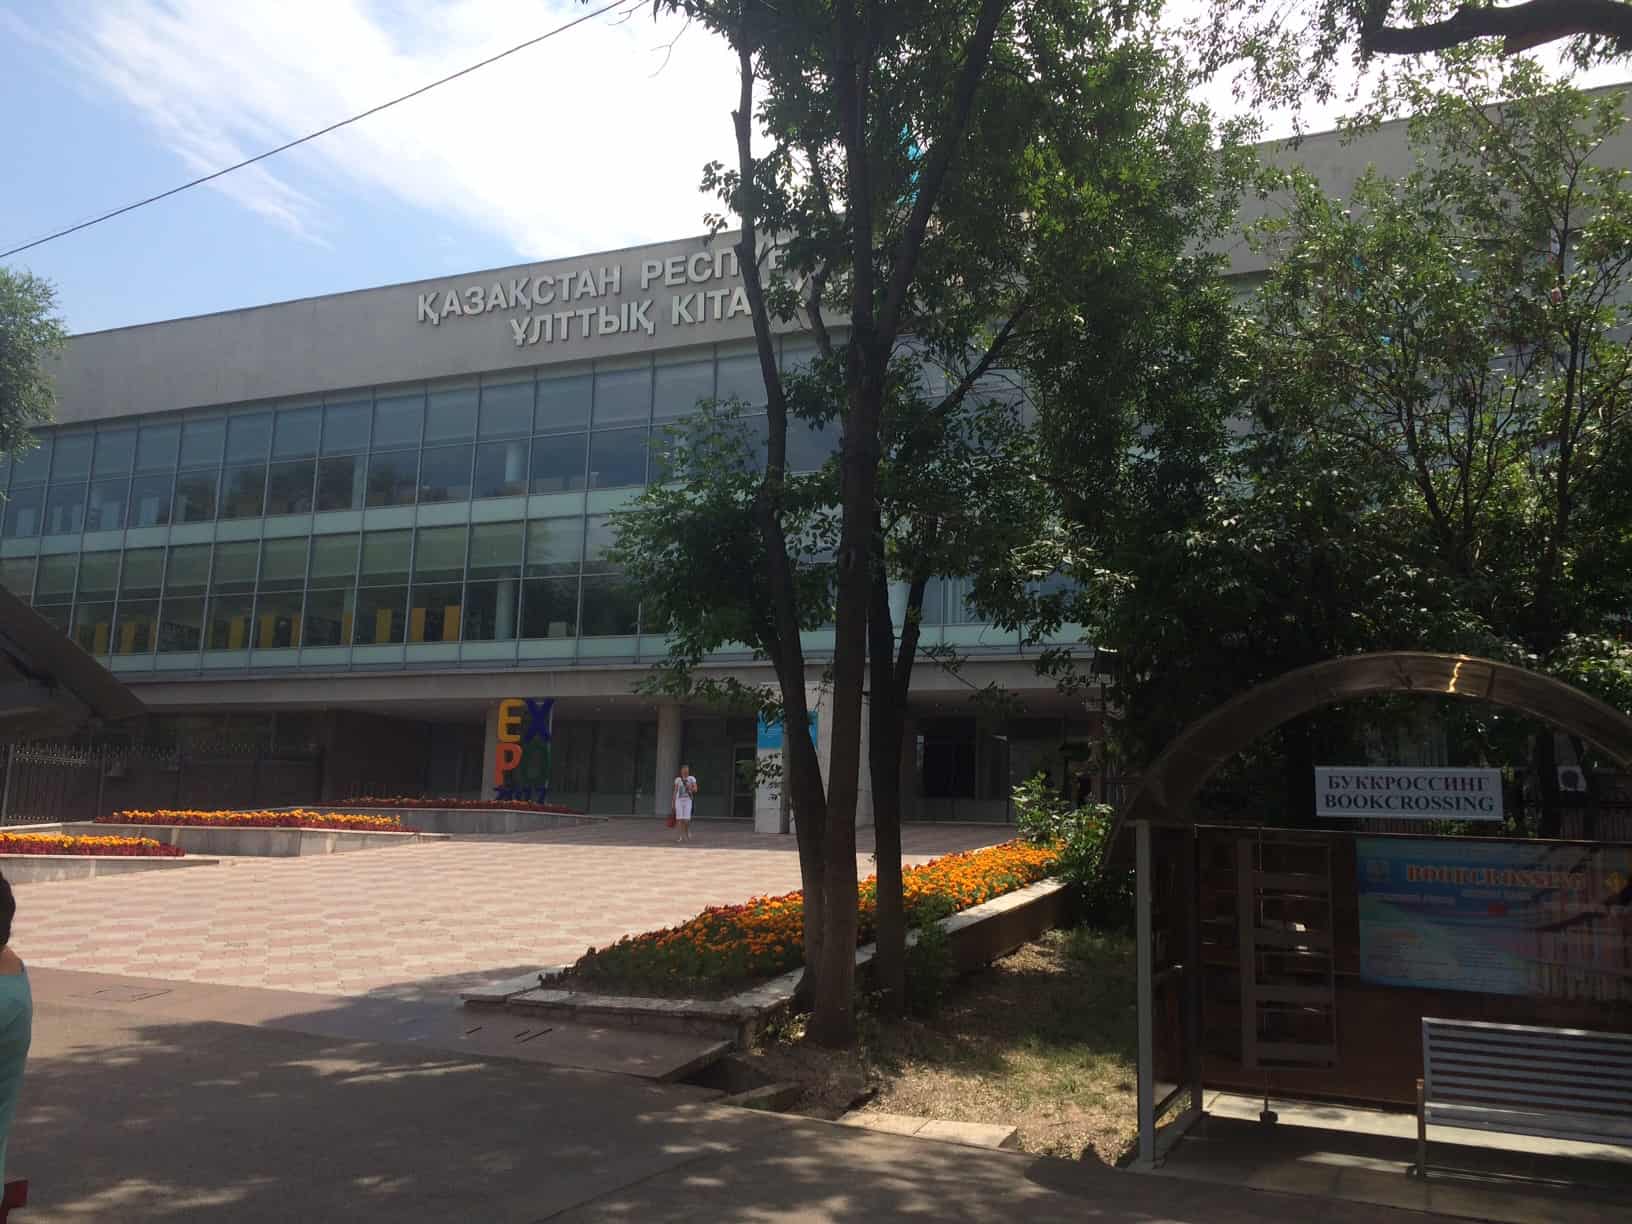 National library of Kazakhstan